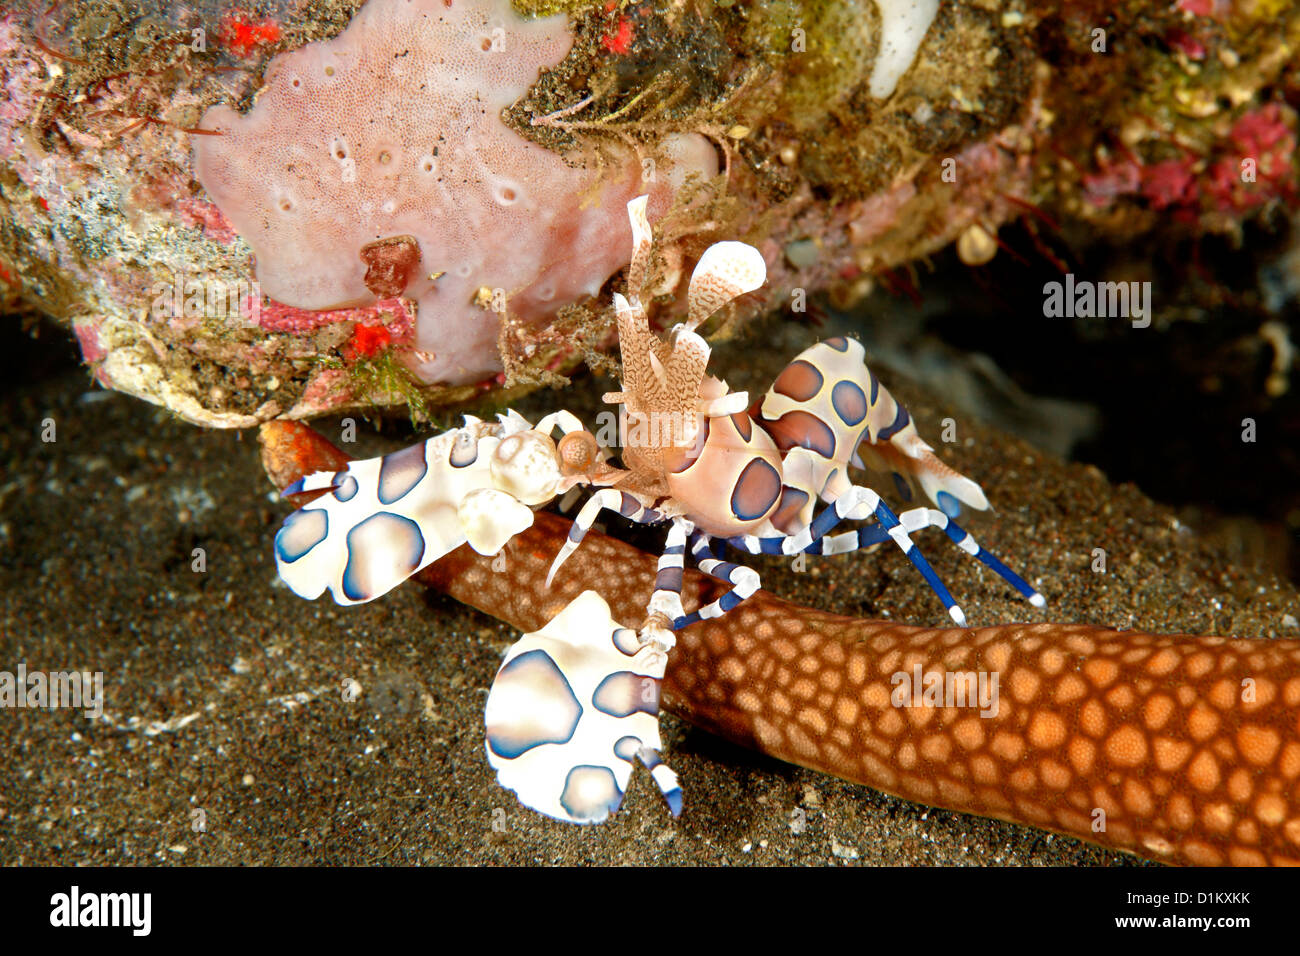 Harlequin Shrimp, Hymenocera picta, stands on the arm of its starfish food, Tulamben, Bali, Indonesia. Bali Sea, Indian Ocean Stock Photo